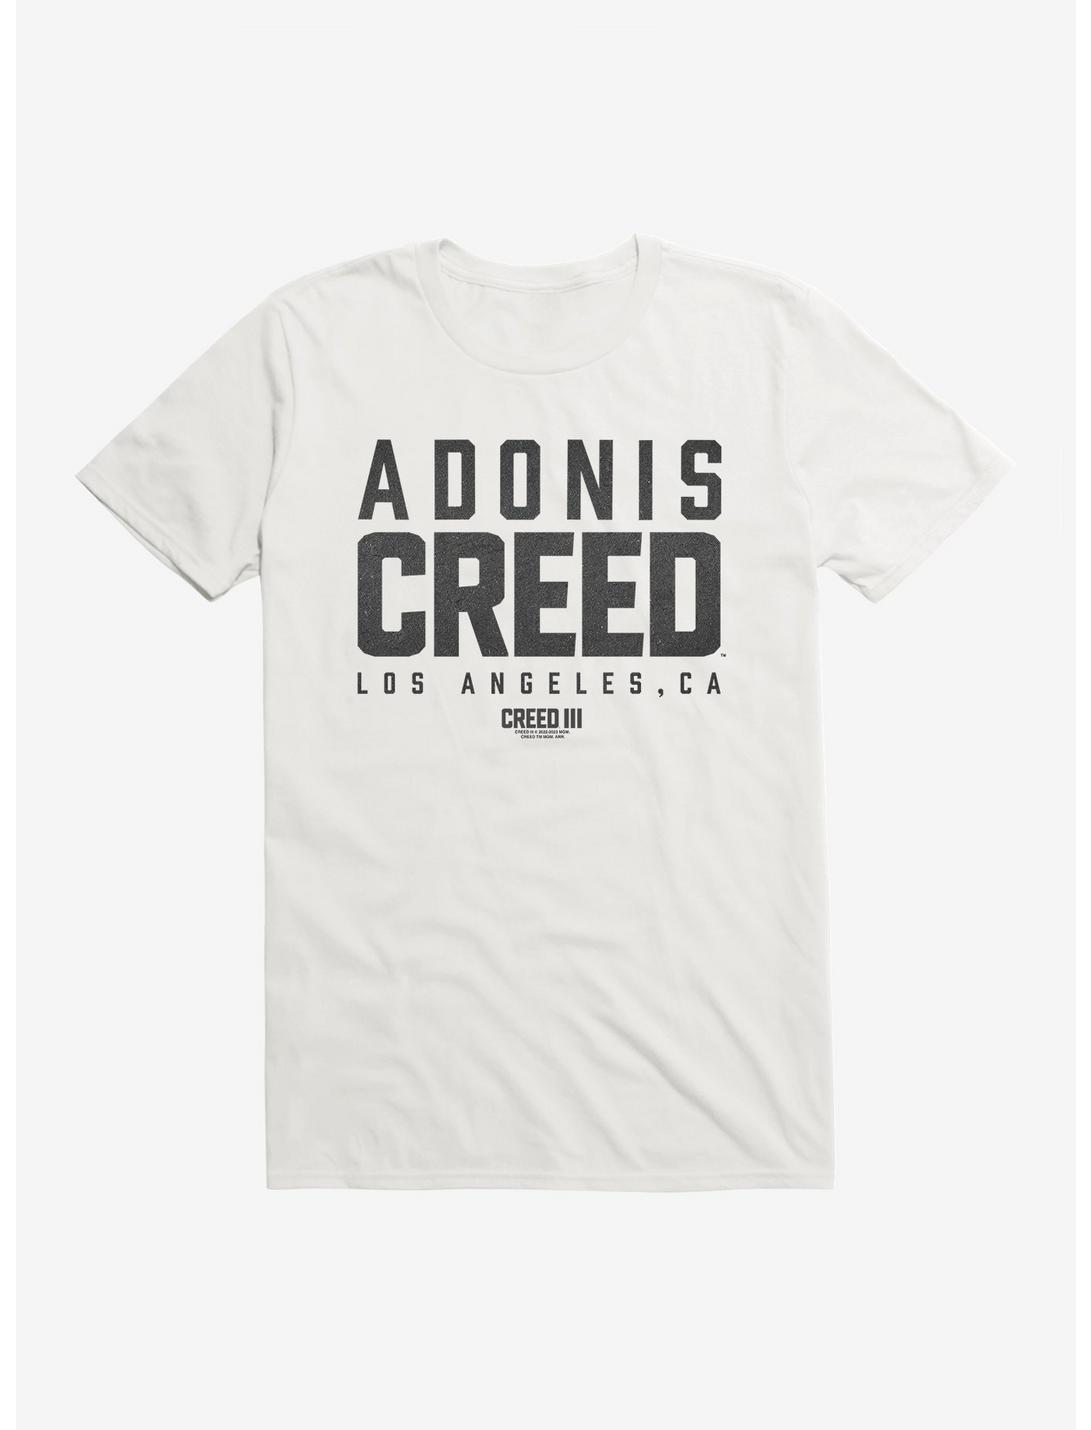 Creed III Adonis Los Angeles T-Shirt, WHITE, hi-res